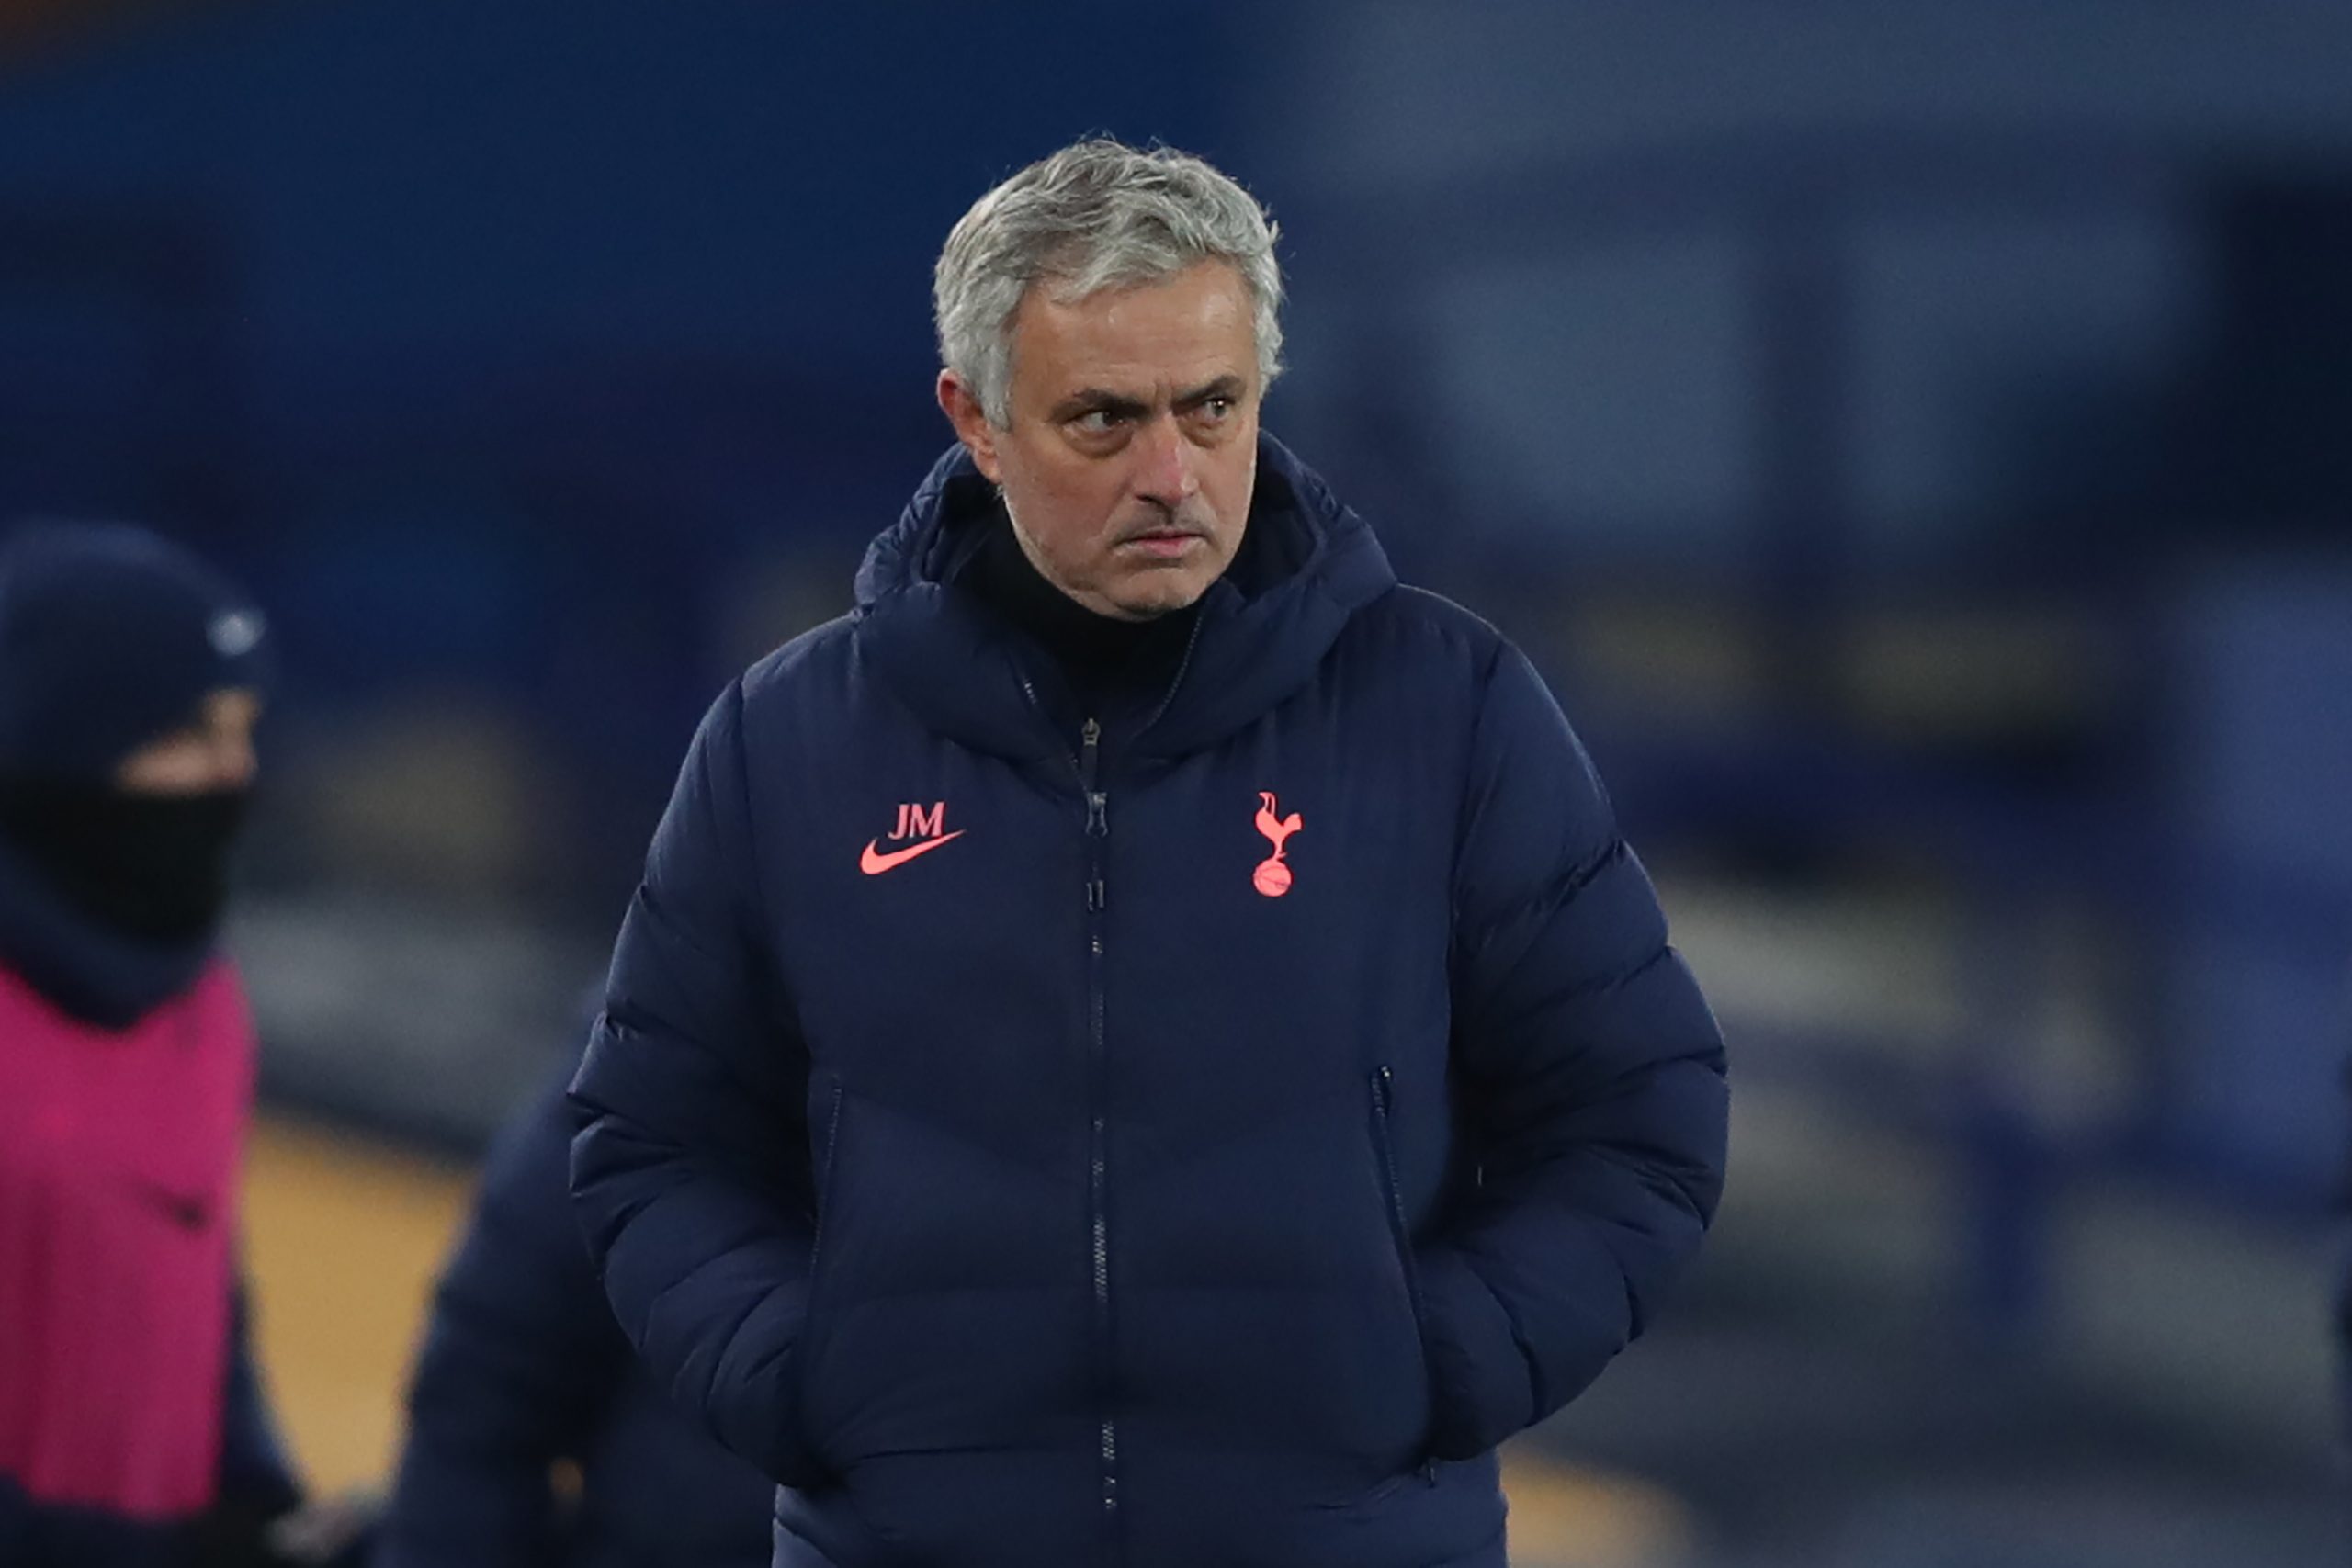 Tottenham boss Jose Mourinho facing the heat after recent results